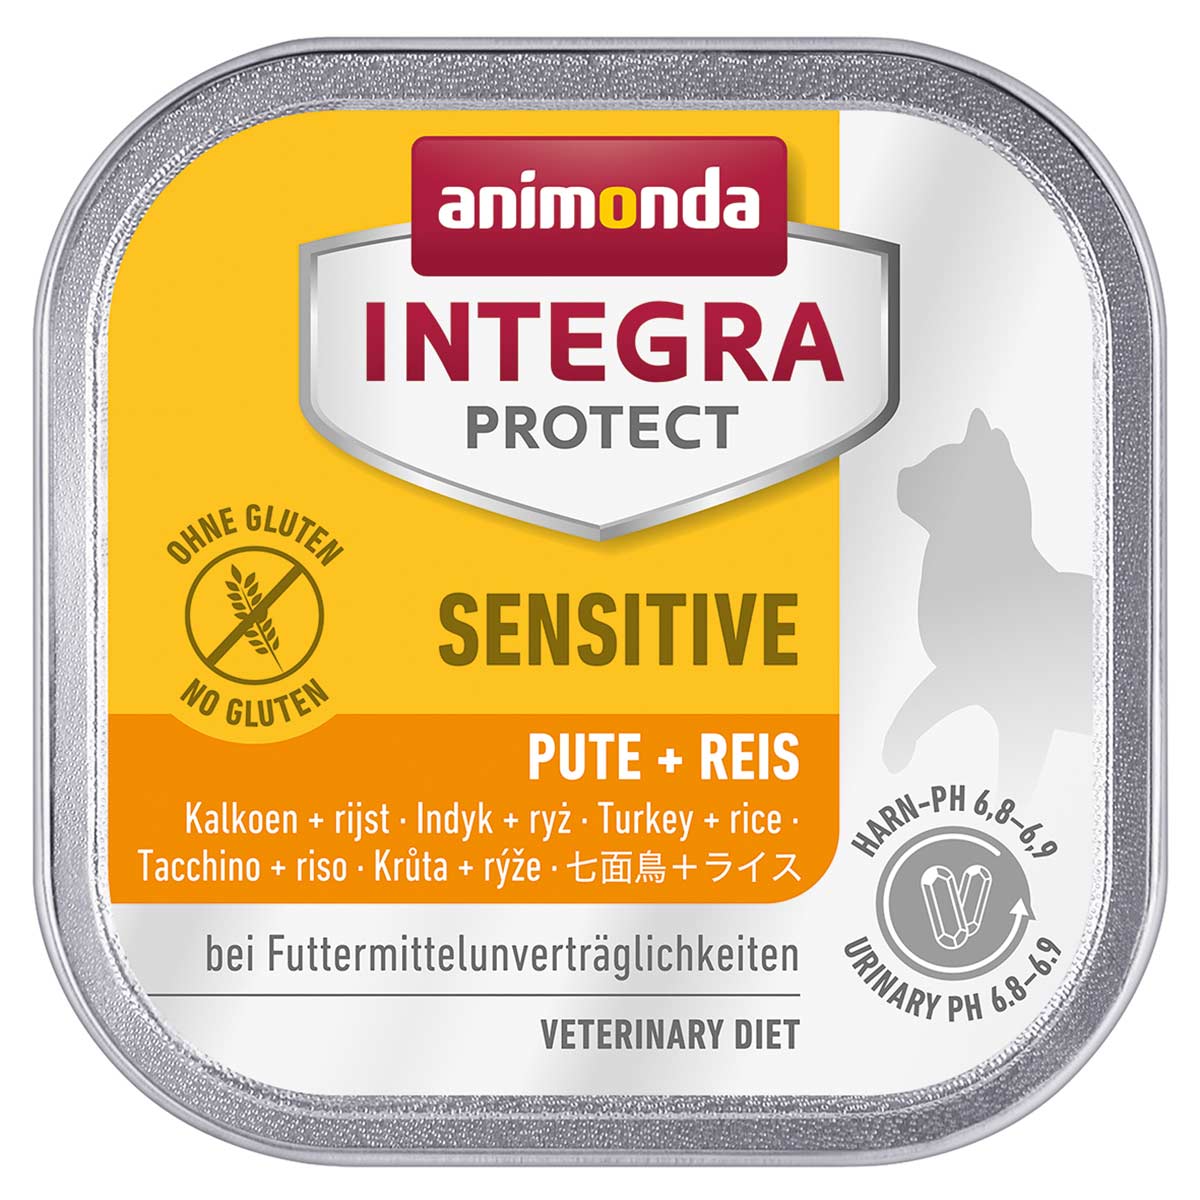 animonda INTEGRA PROTECT Sensitive Pute und Reis 32x100g von animonda Integra Protect